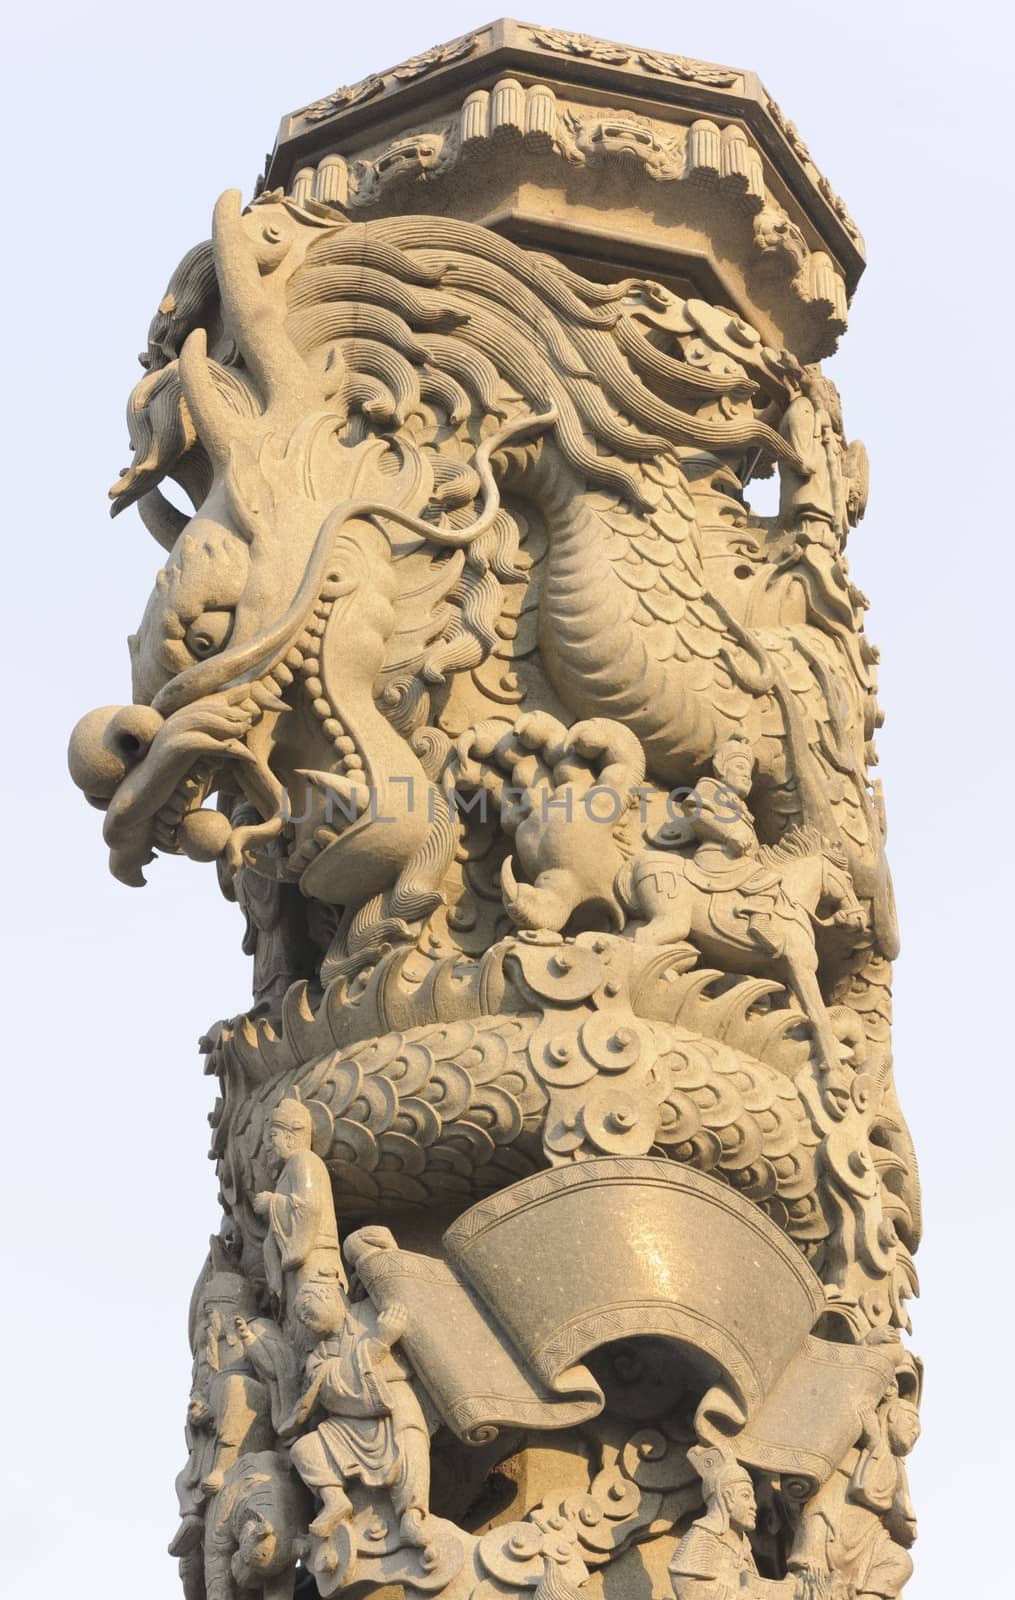 Stone dragon carving pillar. by ngungfoto